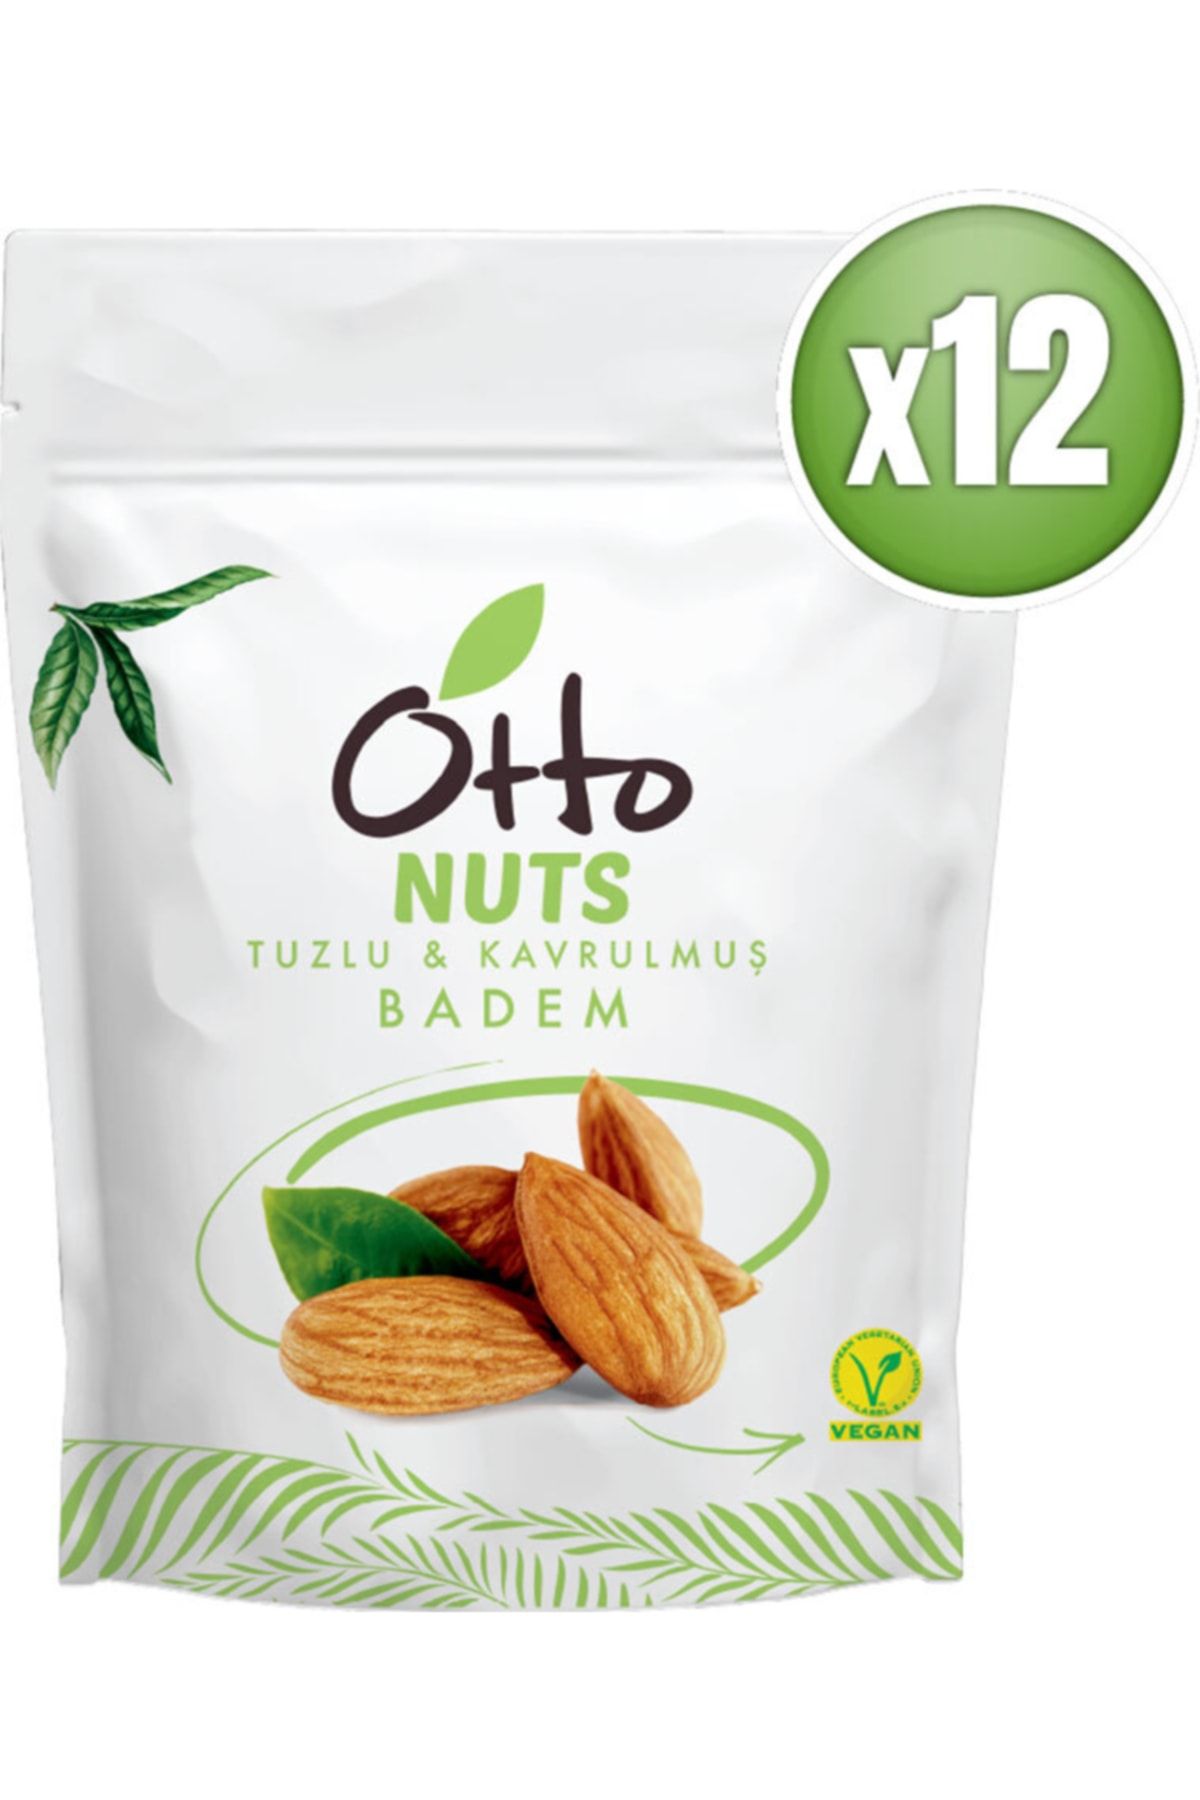 Otto Nuts Vegan Kavrulmuş Badem 12 X 150 g